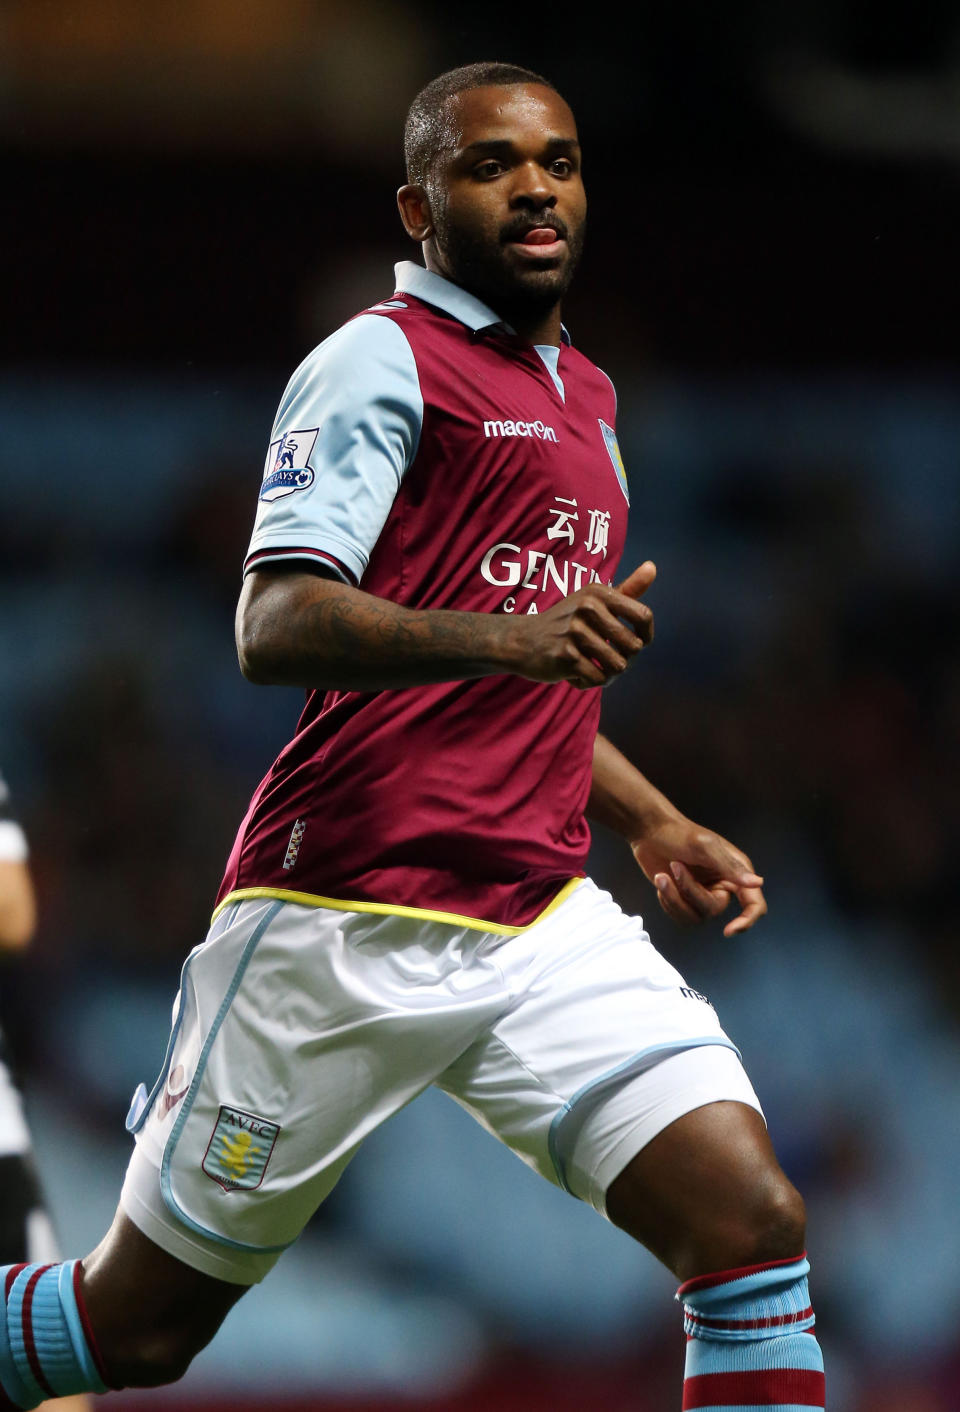 Darren Bent - Aston Villa to Fulham (Season-long loan)